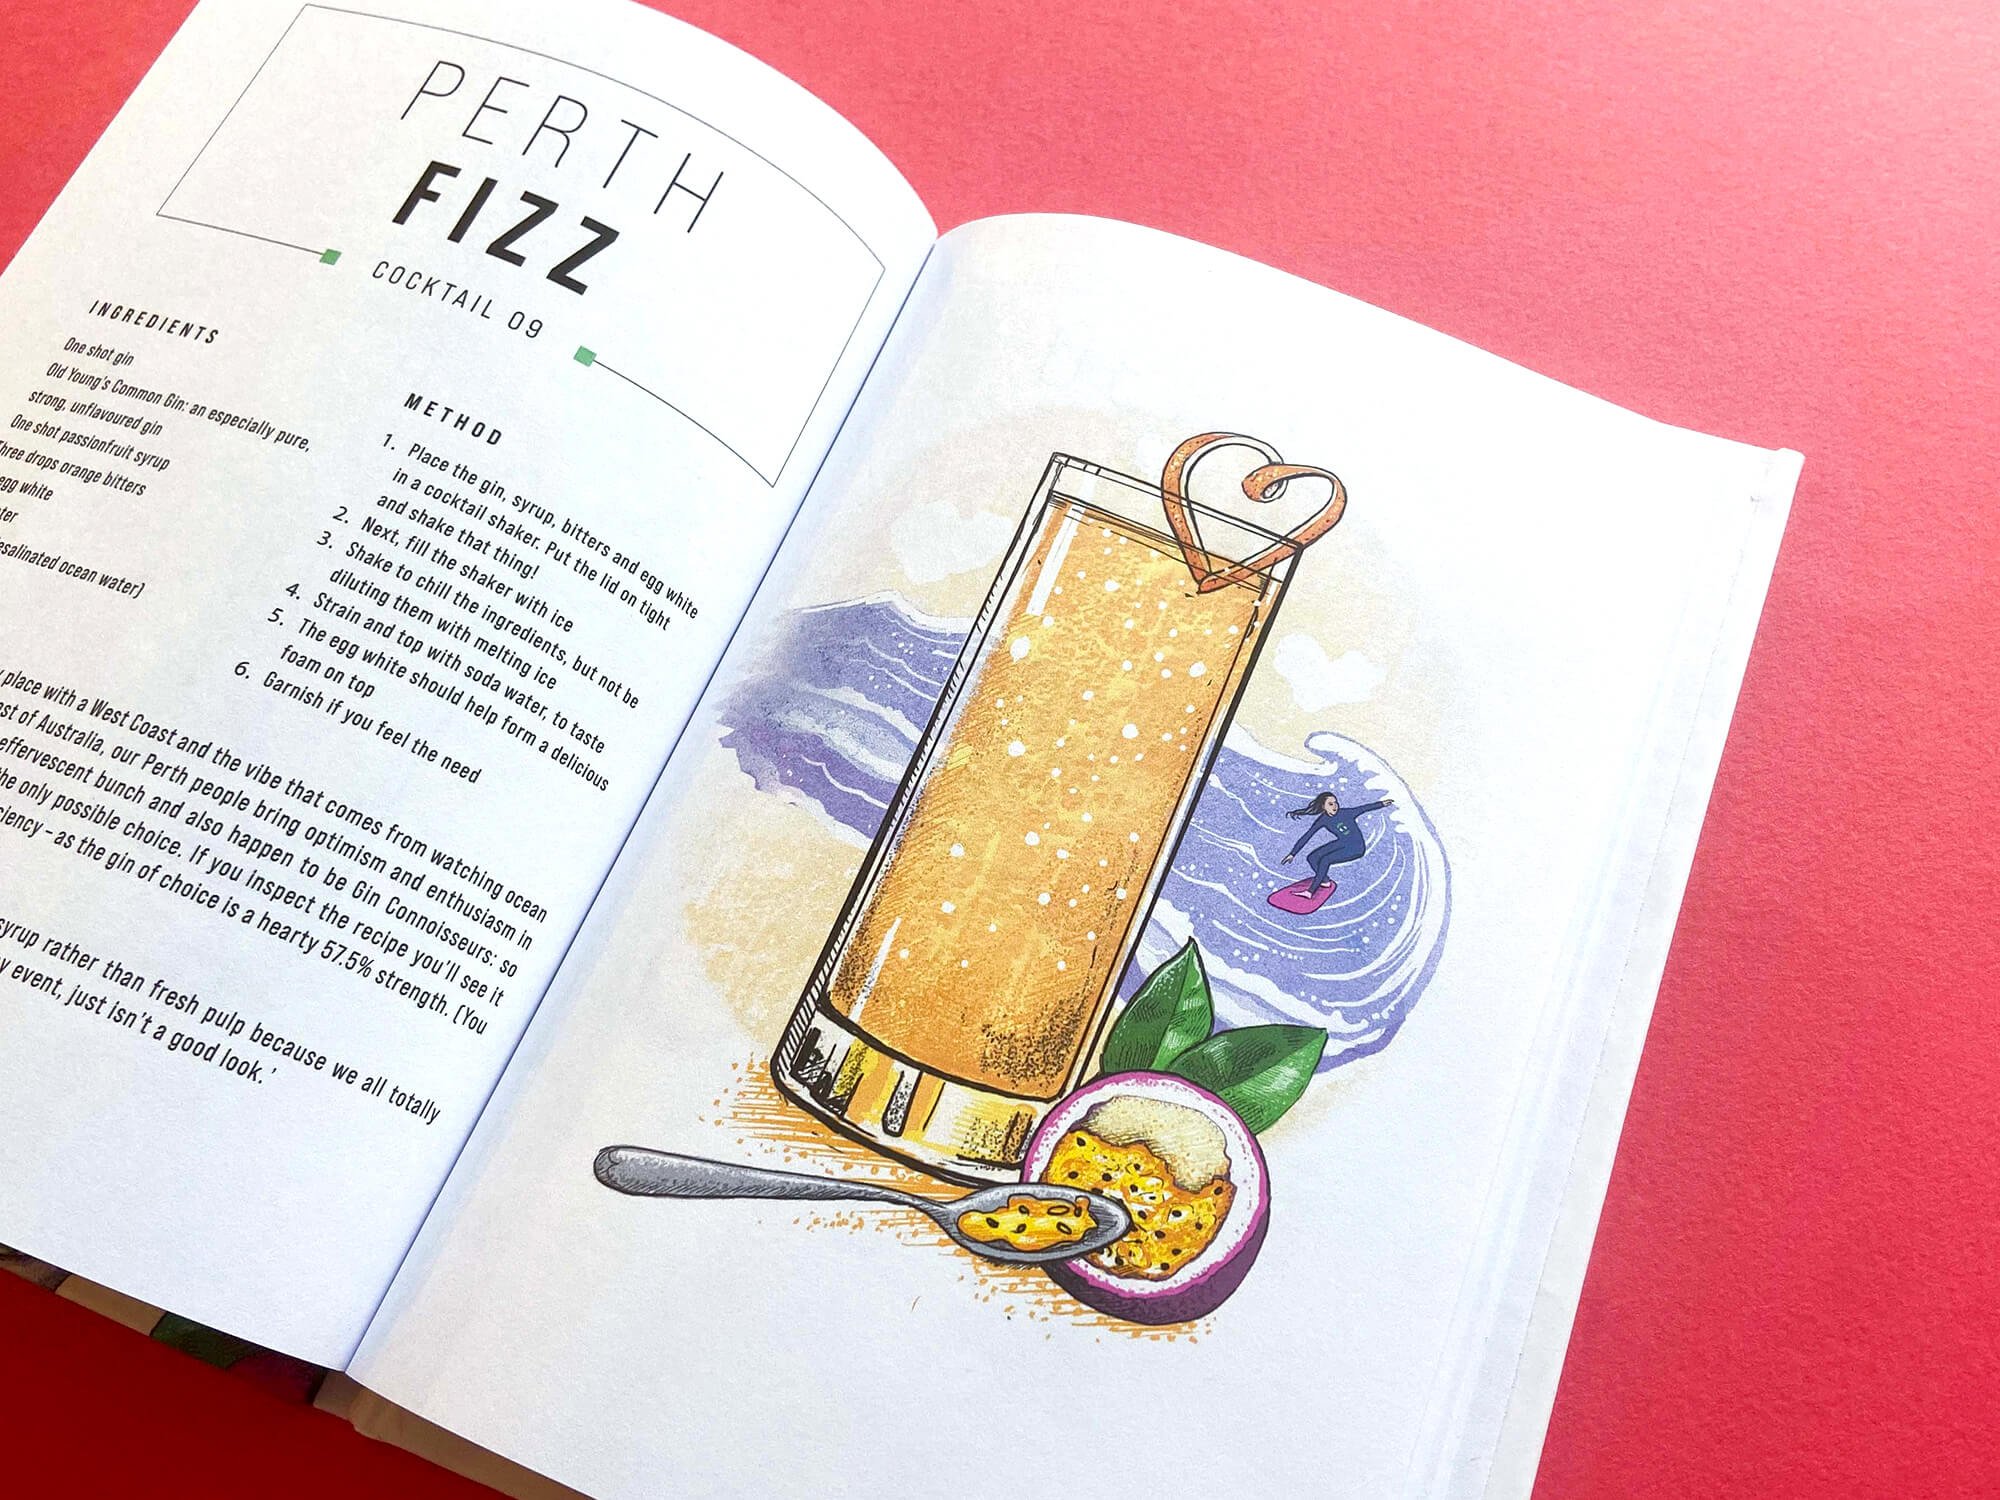 perth-fizz-cocktail-illustration.jpg